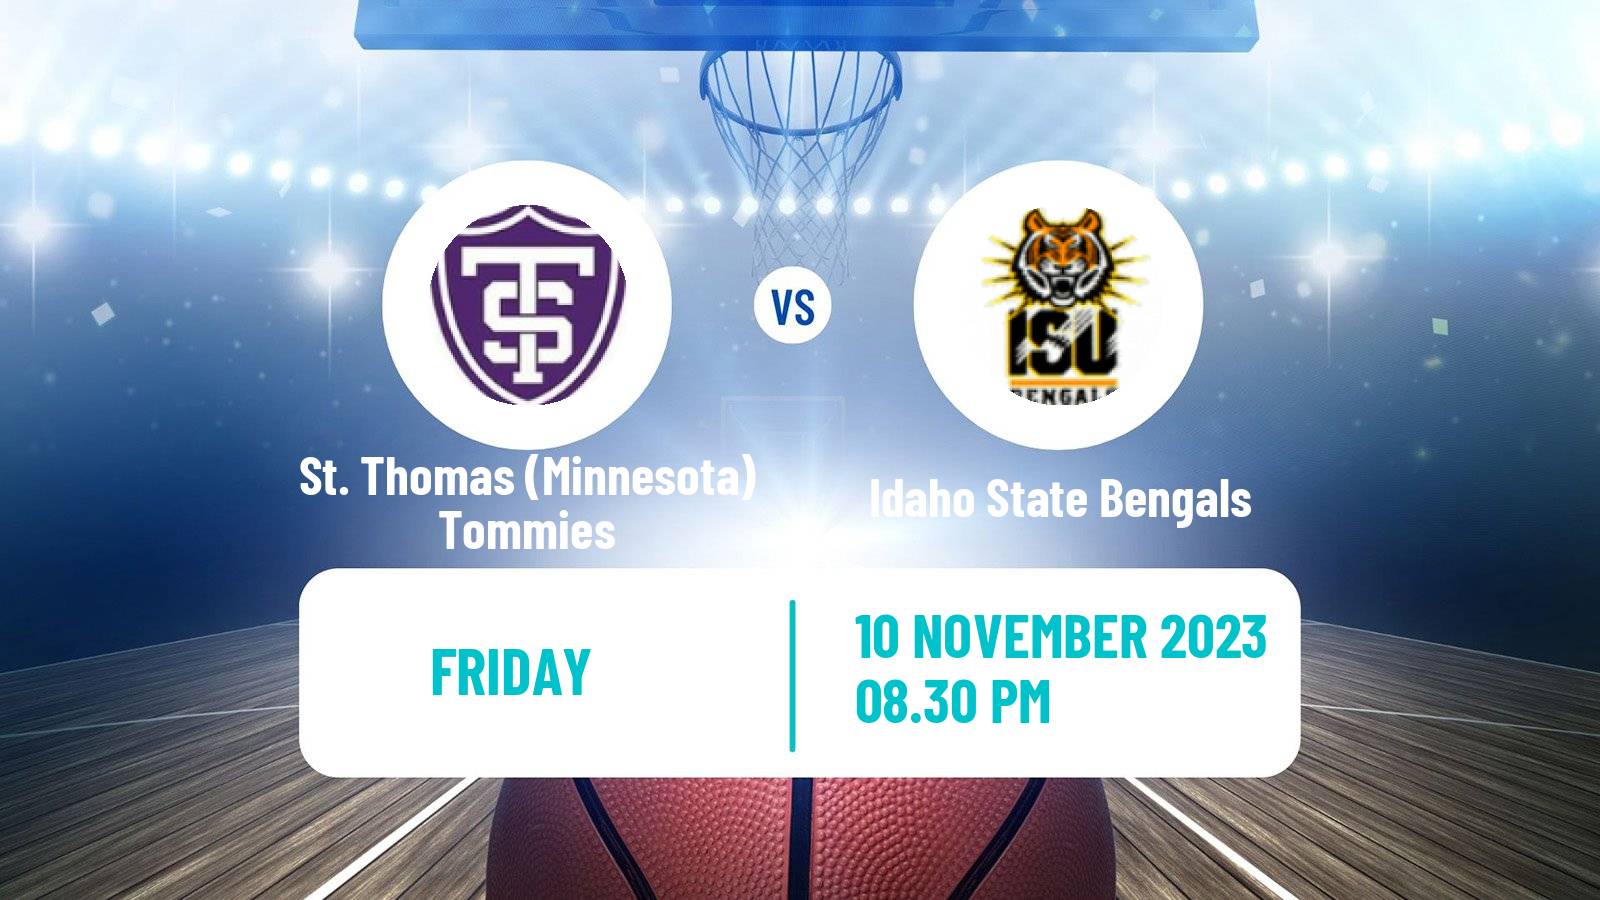 Basketball NCAA College Basketball St. Thomas (Minnesota) Tommies - Idaho State Bengals